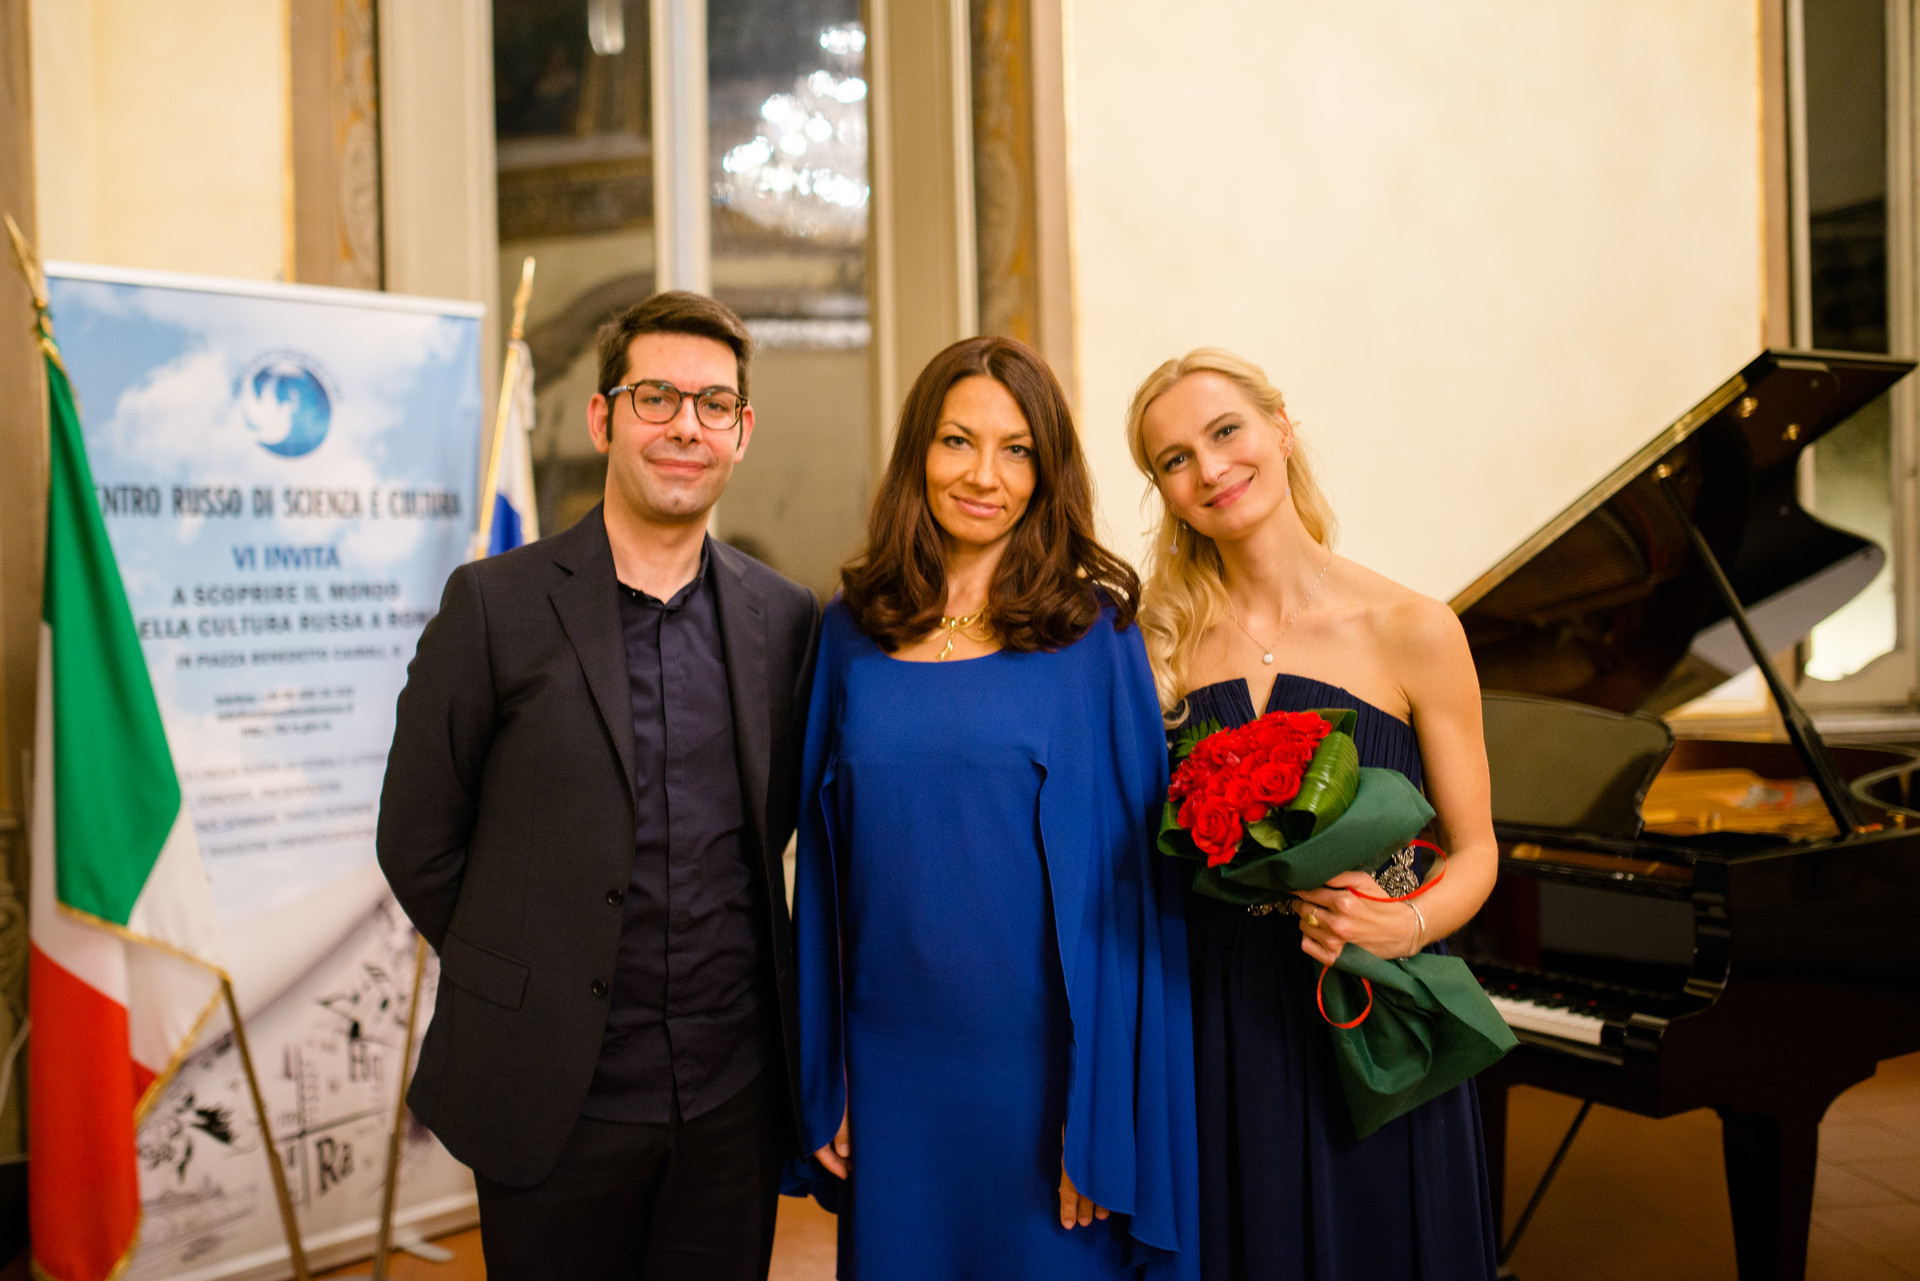 Da sinistra: Giuseppe Rossi (pianoforte), Daria Pushkova e Elena Tsarenko (mezzosoprano)